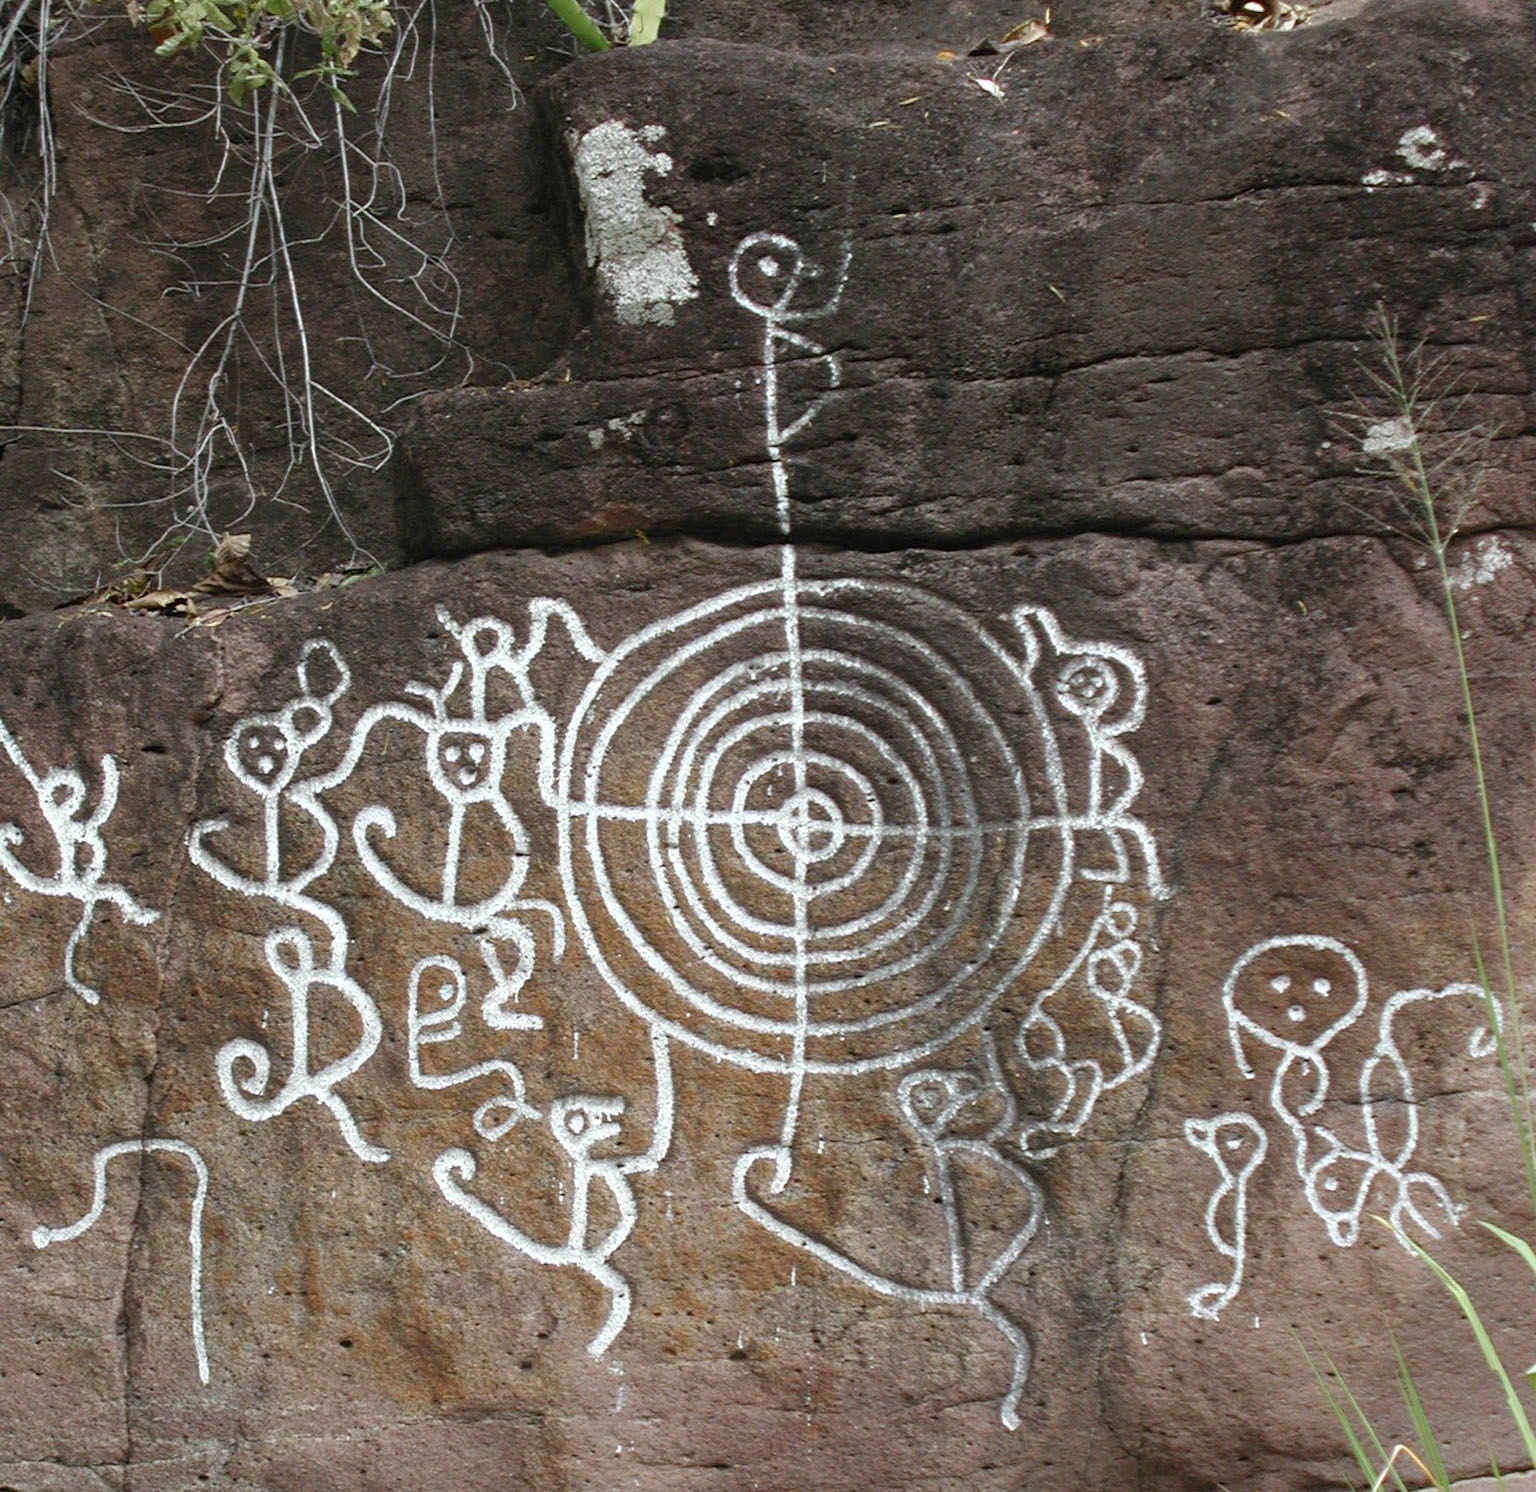 Petroglyphs found on Ometepe Island in Lake Nicaragua